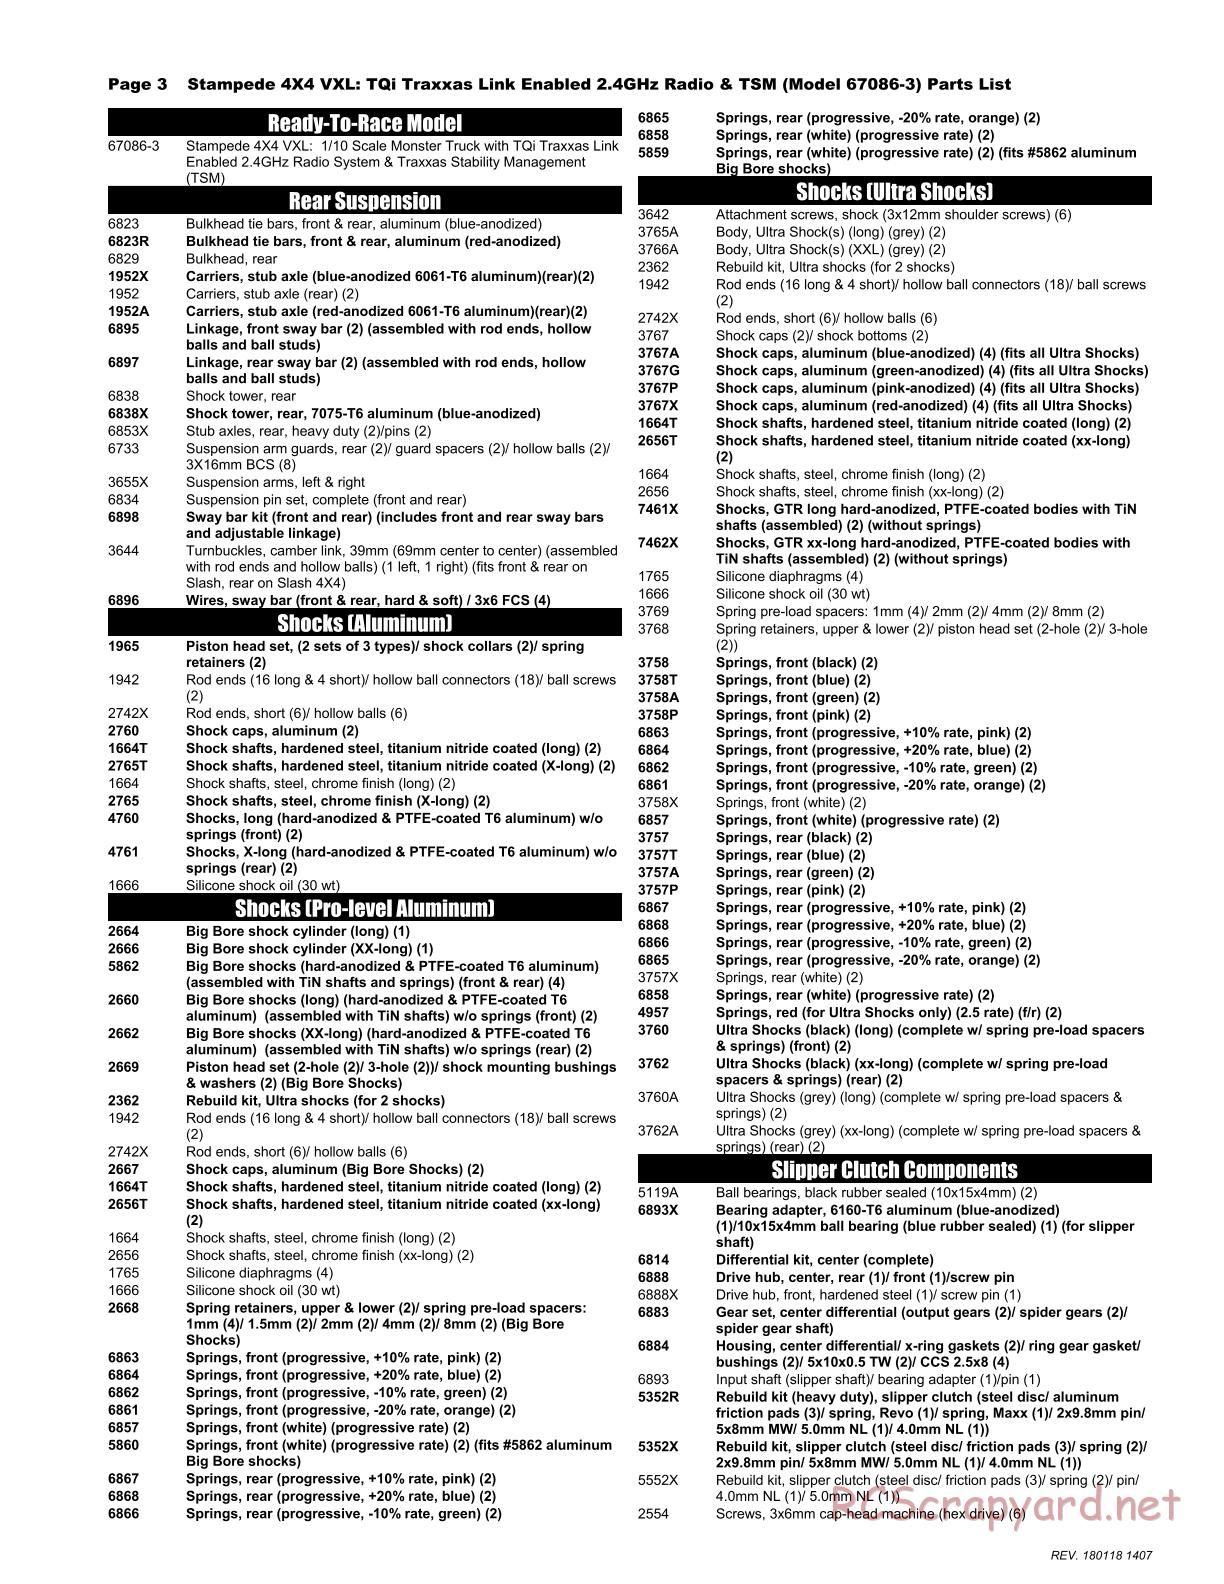 Traxxas - Stampede 4x4 VXL TSM (2015) - Parts List - Page 3